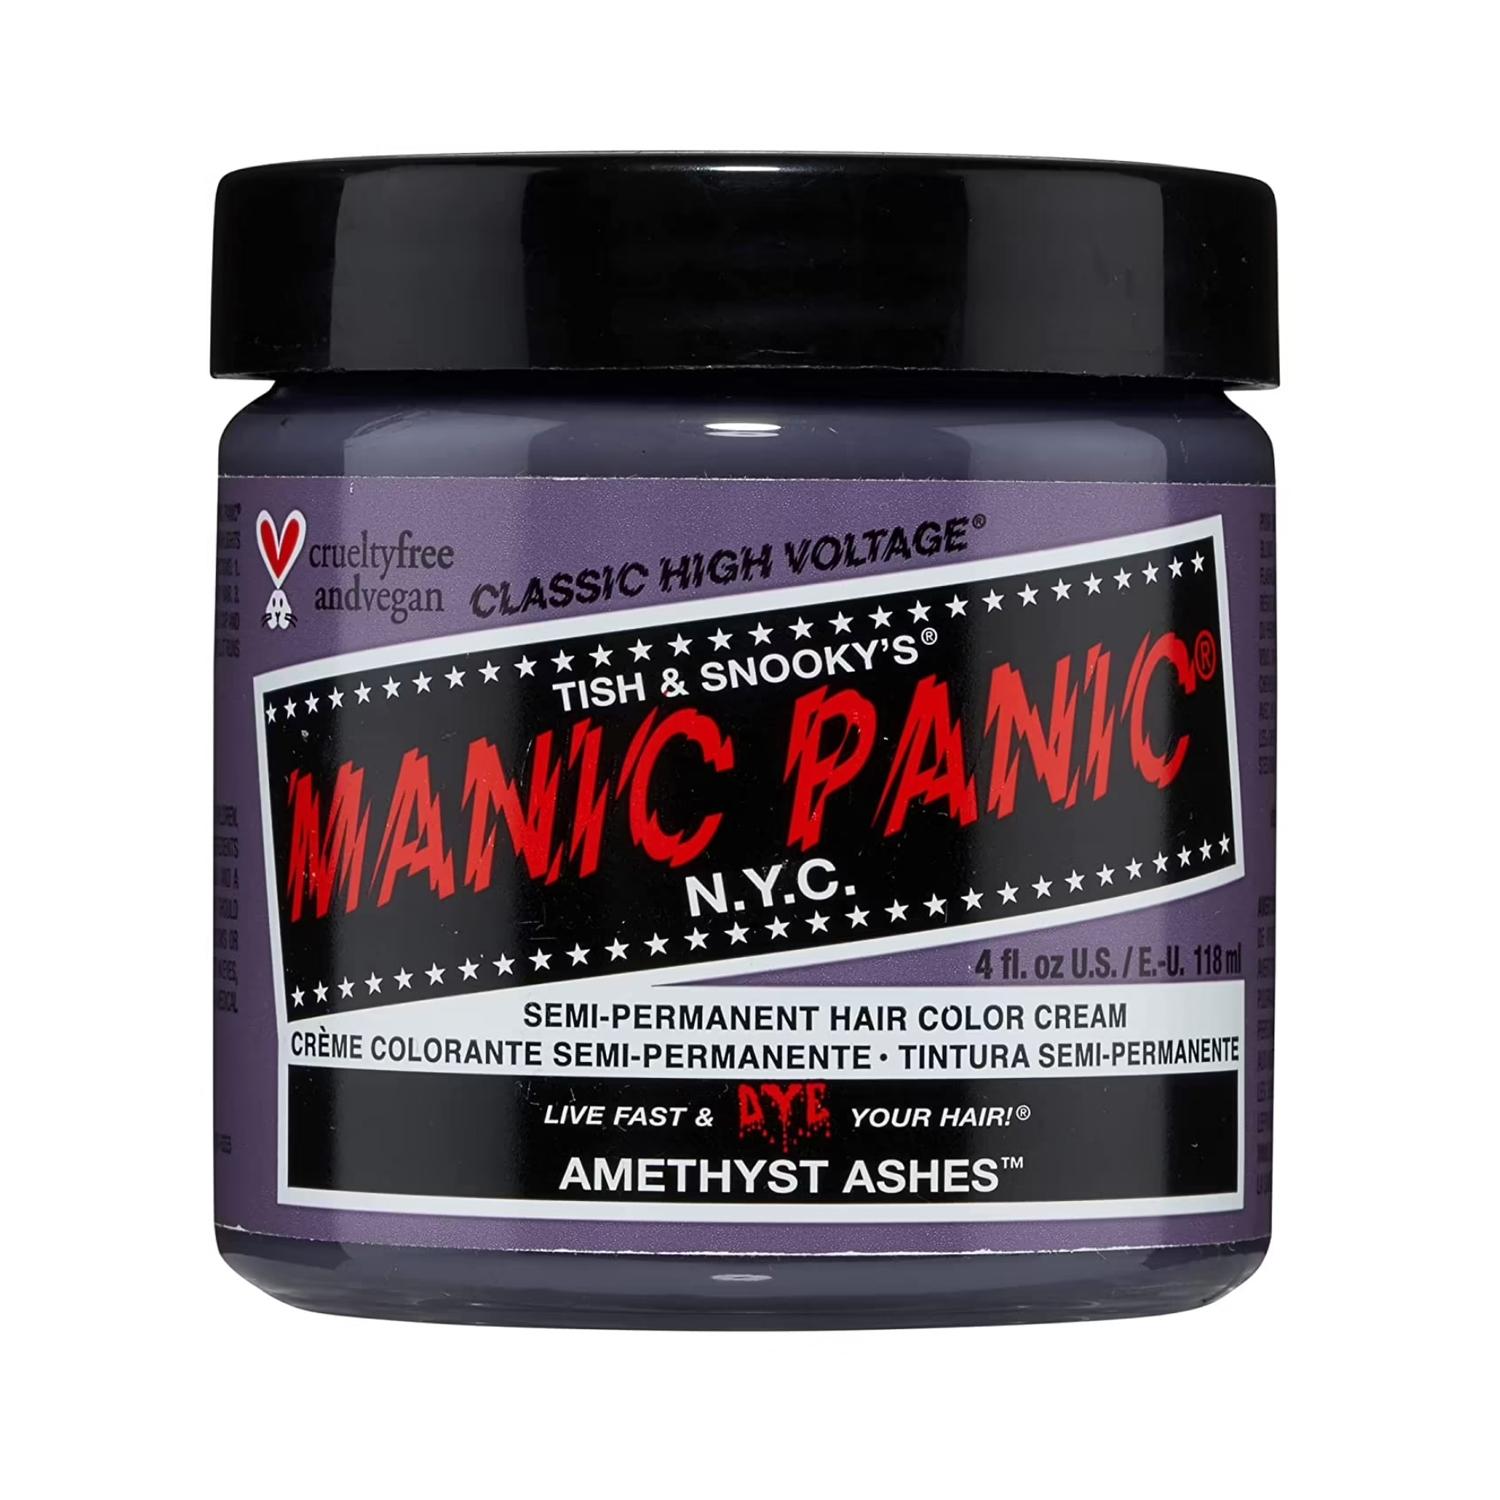 manic-panic-classic-high-voltage-semi-permanent-hair-color-cream---amethyst-ashes-(118ml)